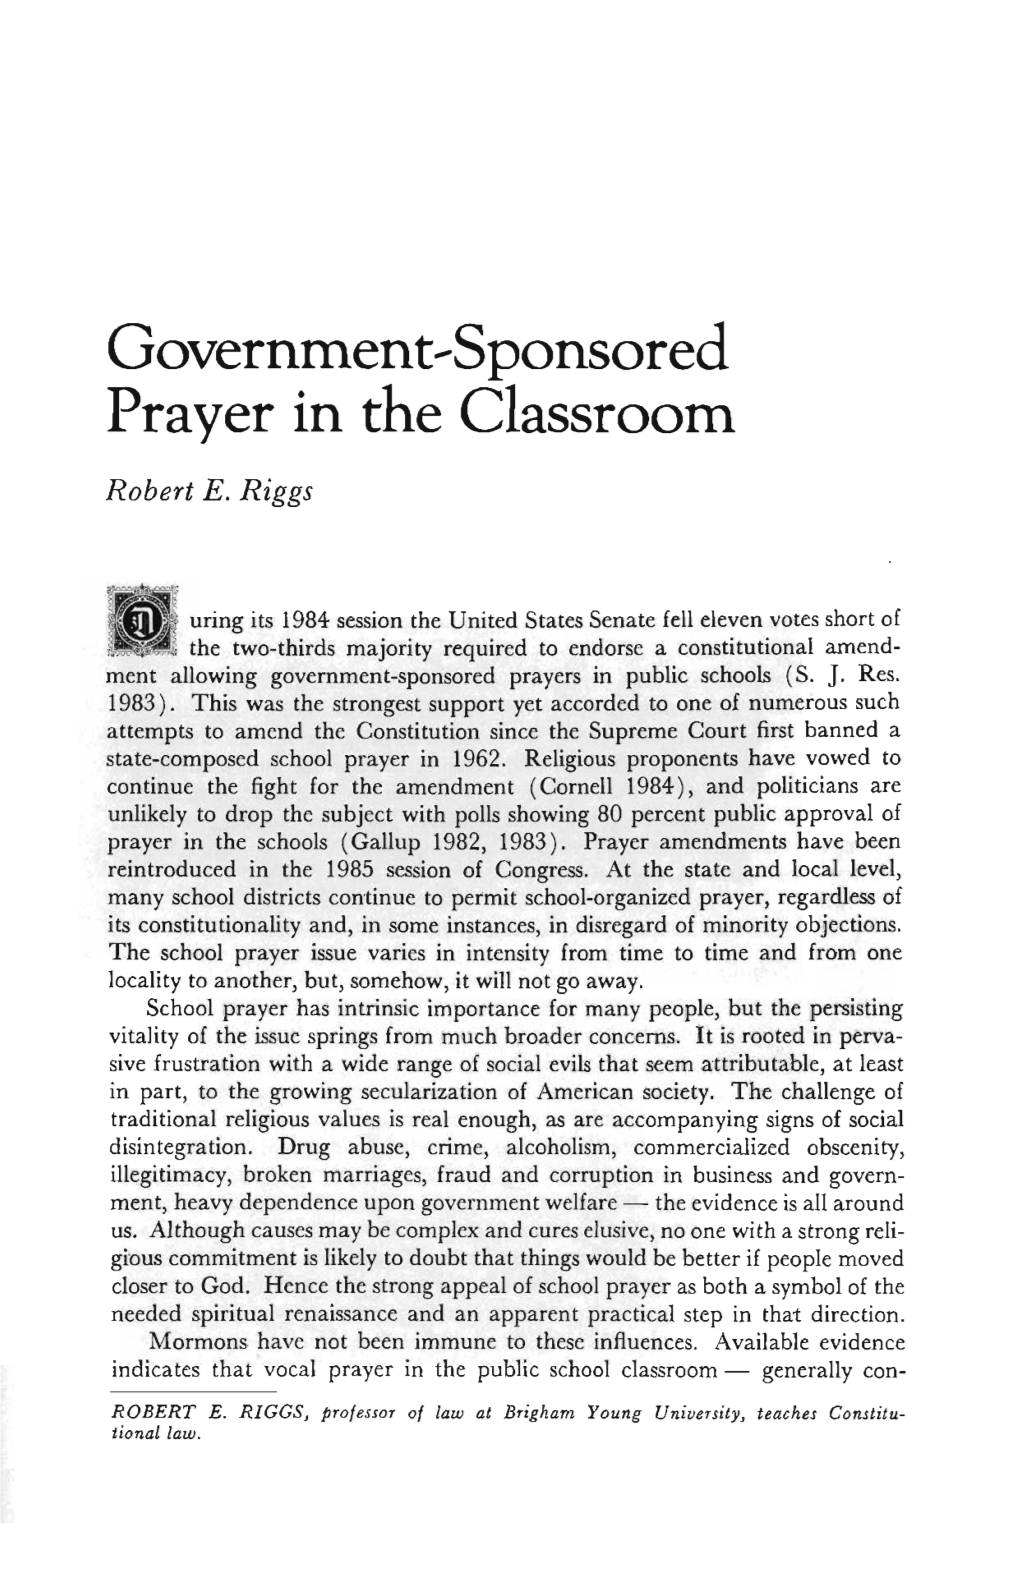 Government-Sponsored Prayer in the Classroom Robert E